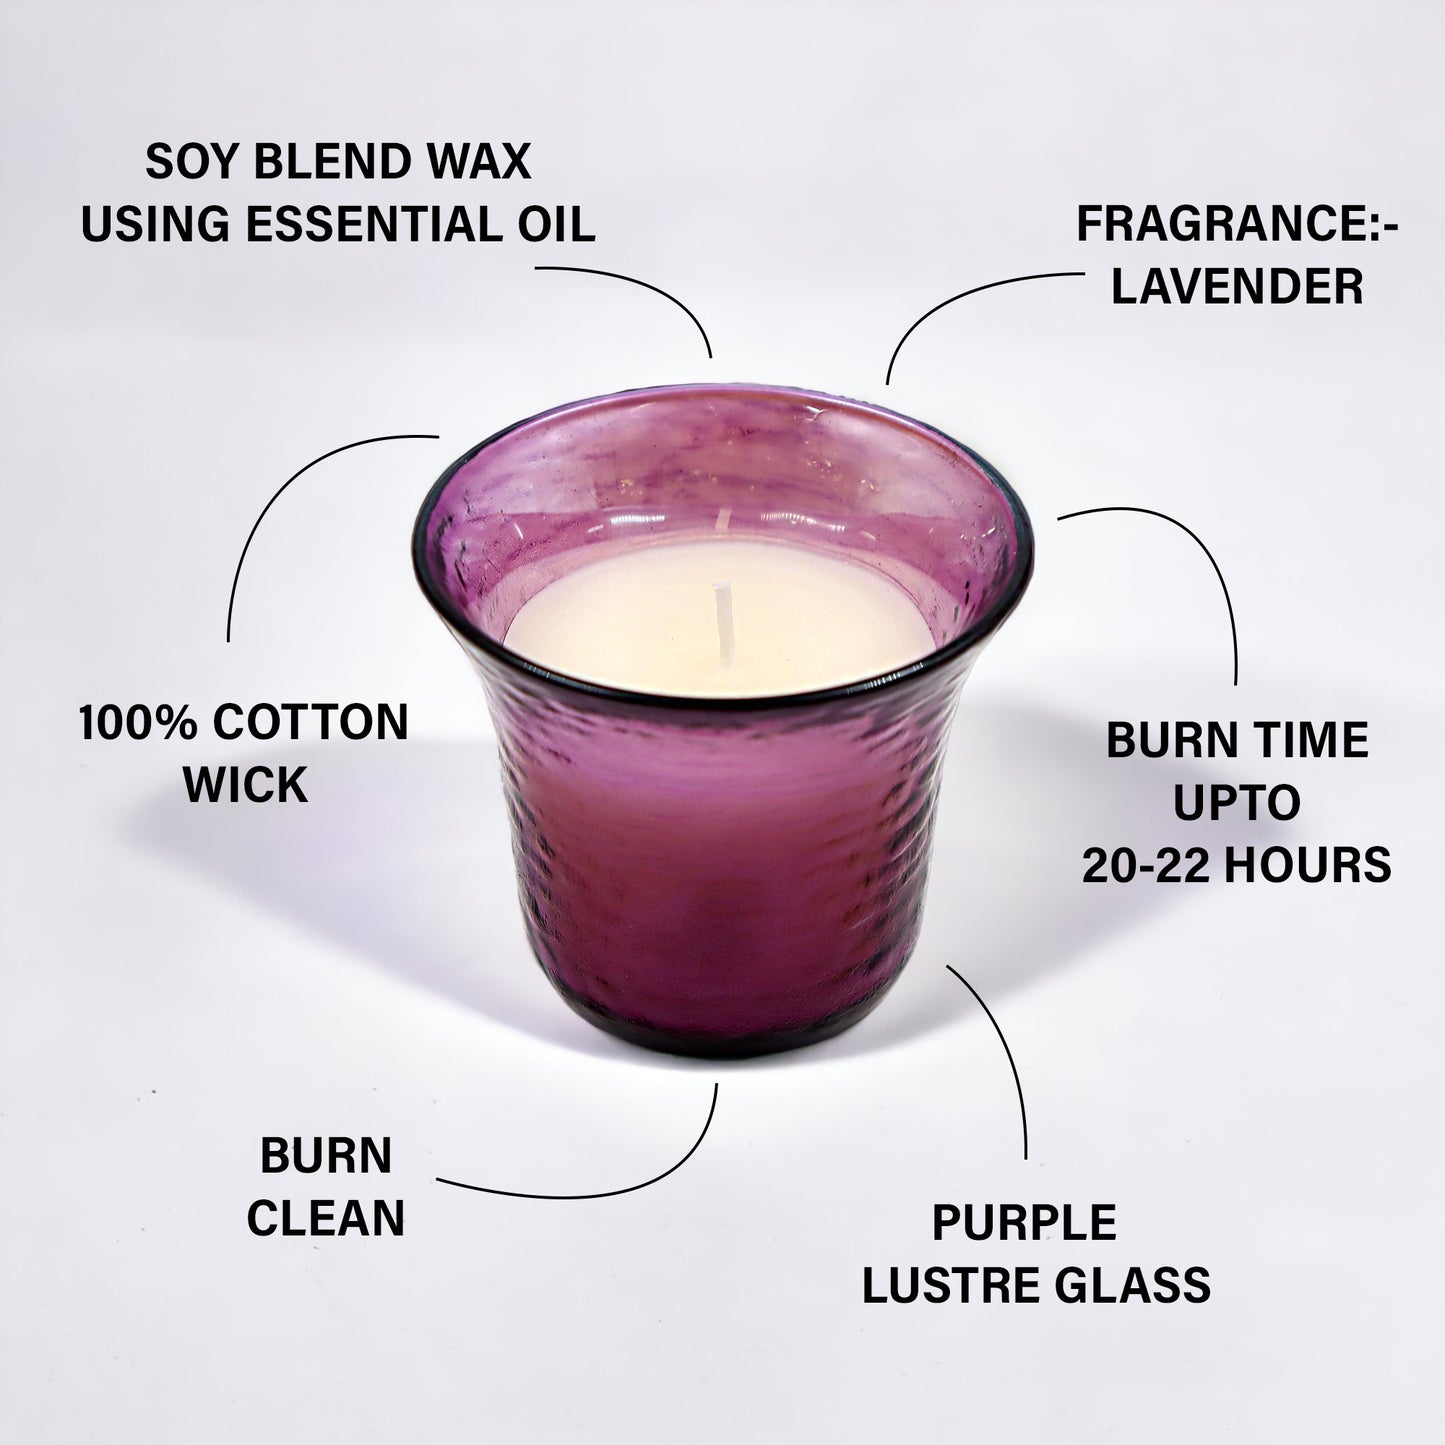 Hosley Lavender Scented Votive Candle – Set of 3